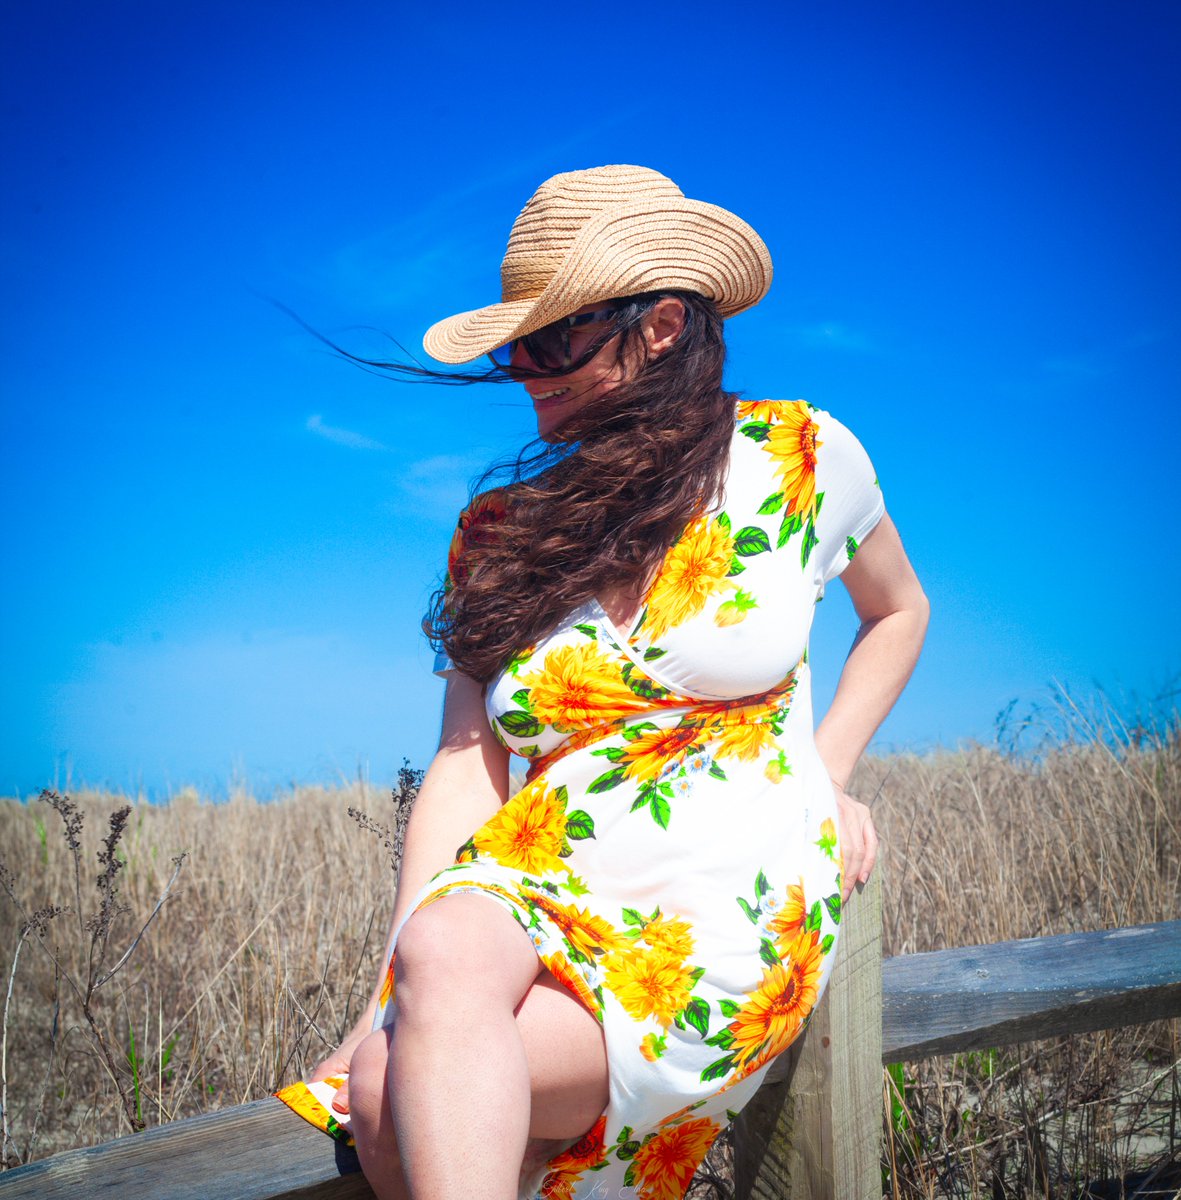 Spring #photography #photooftheday #photograph #sunset #women #fashion #beach #spring #dress #beaches #colorphoto #beauty #sunrise #spring #summer #colourphotography #photoshoot #sun #landscape #photographer #photos #photographylovers #color